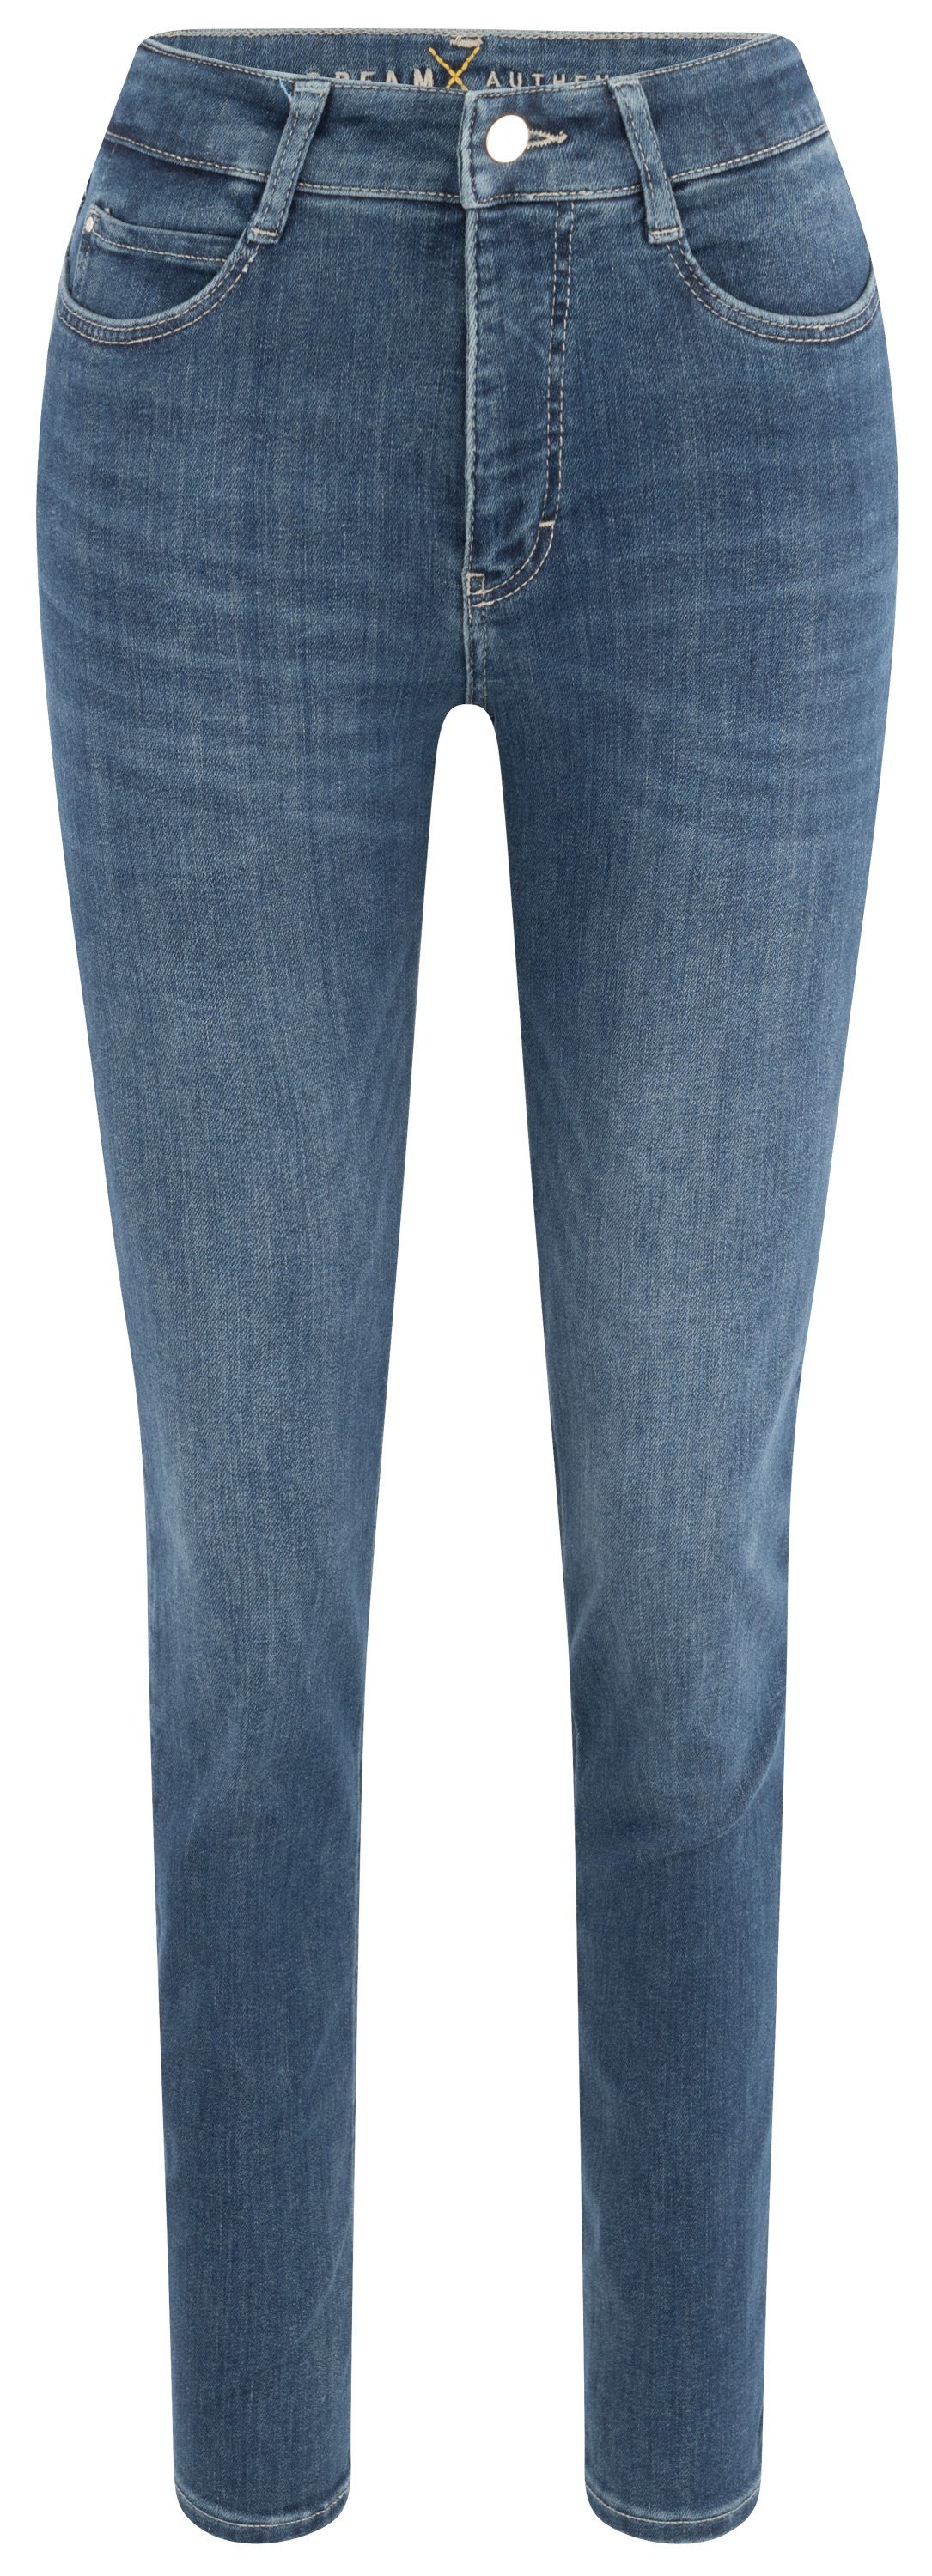 MAC Stretch-Jeans MAC DREAM mid blue authentic wash 5456-90-0358 D625